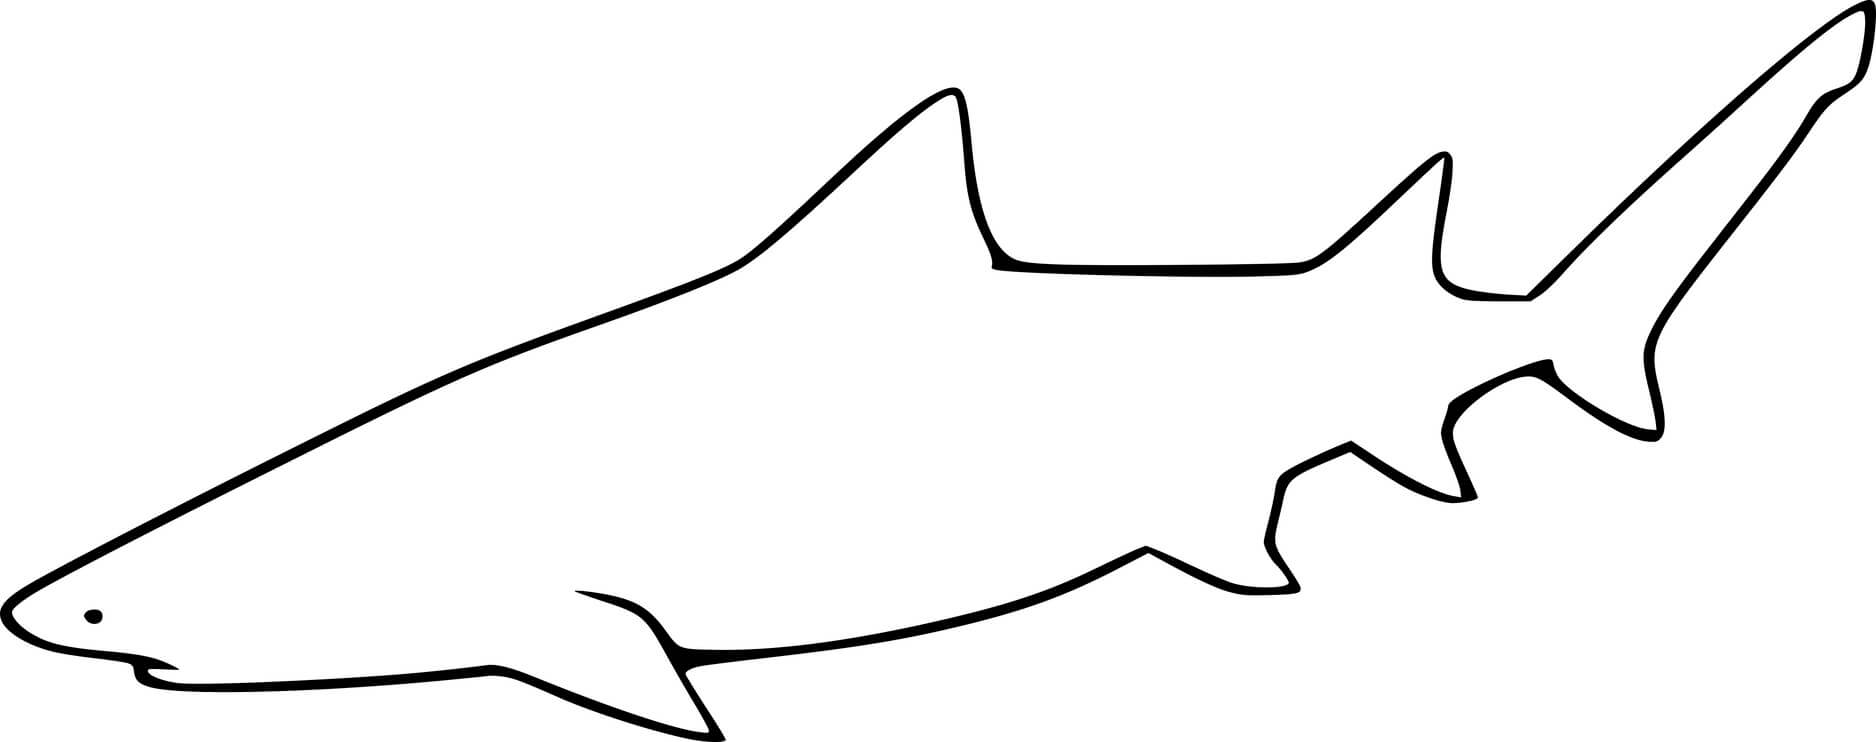 Lemon Shark Outline Coloring Page